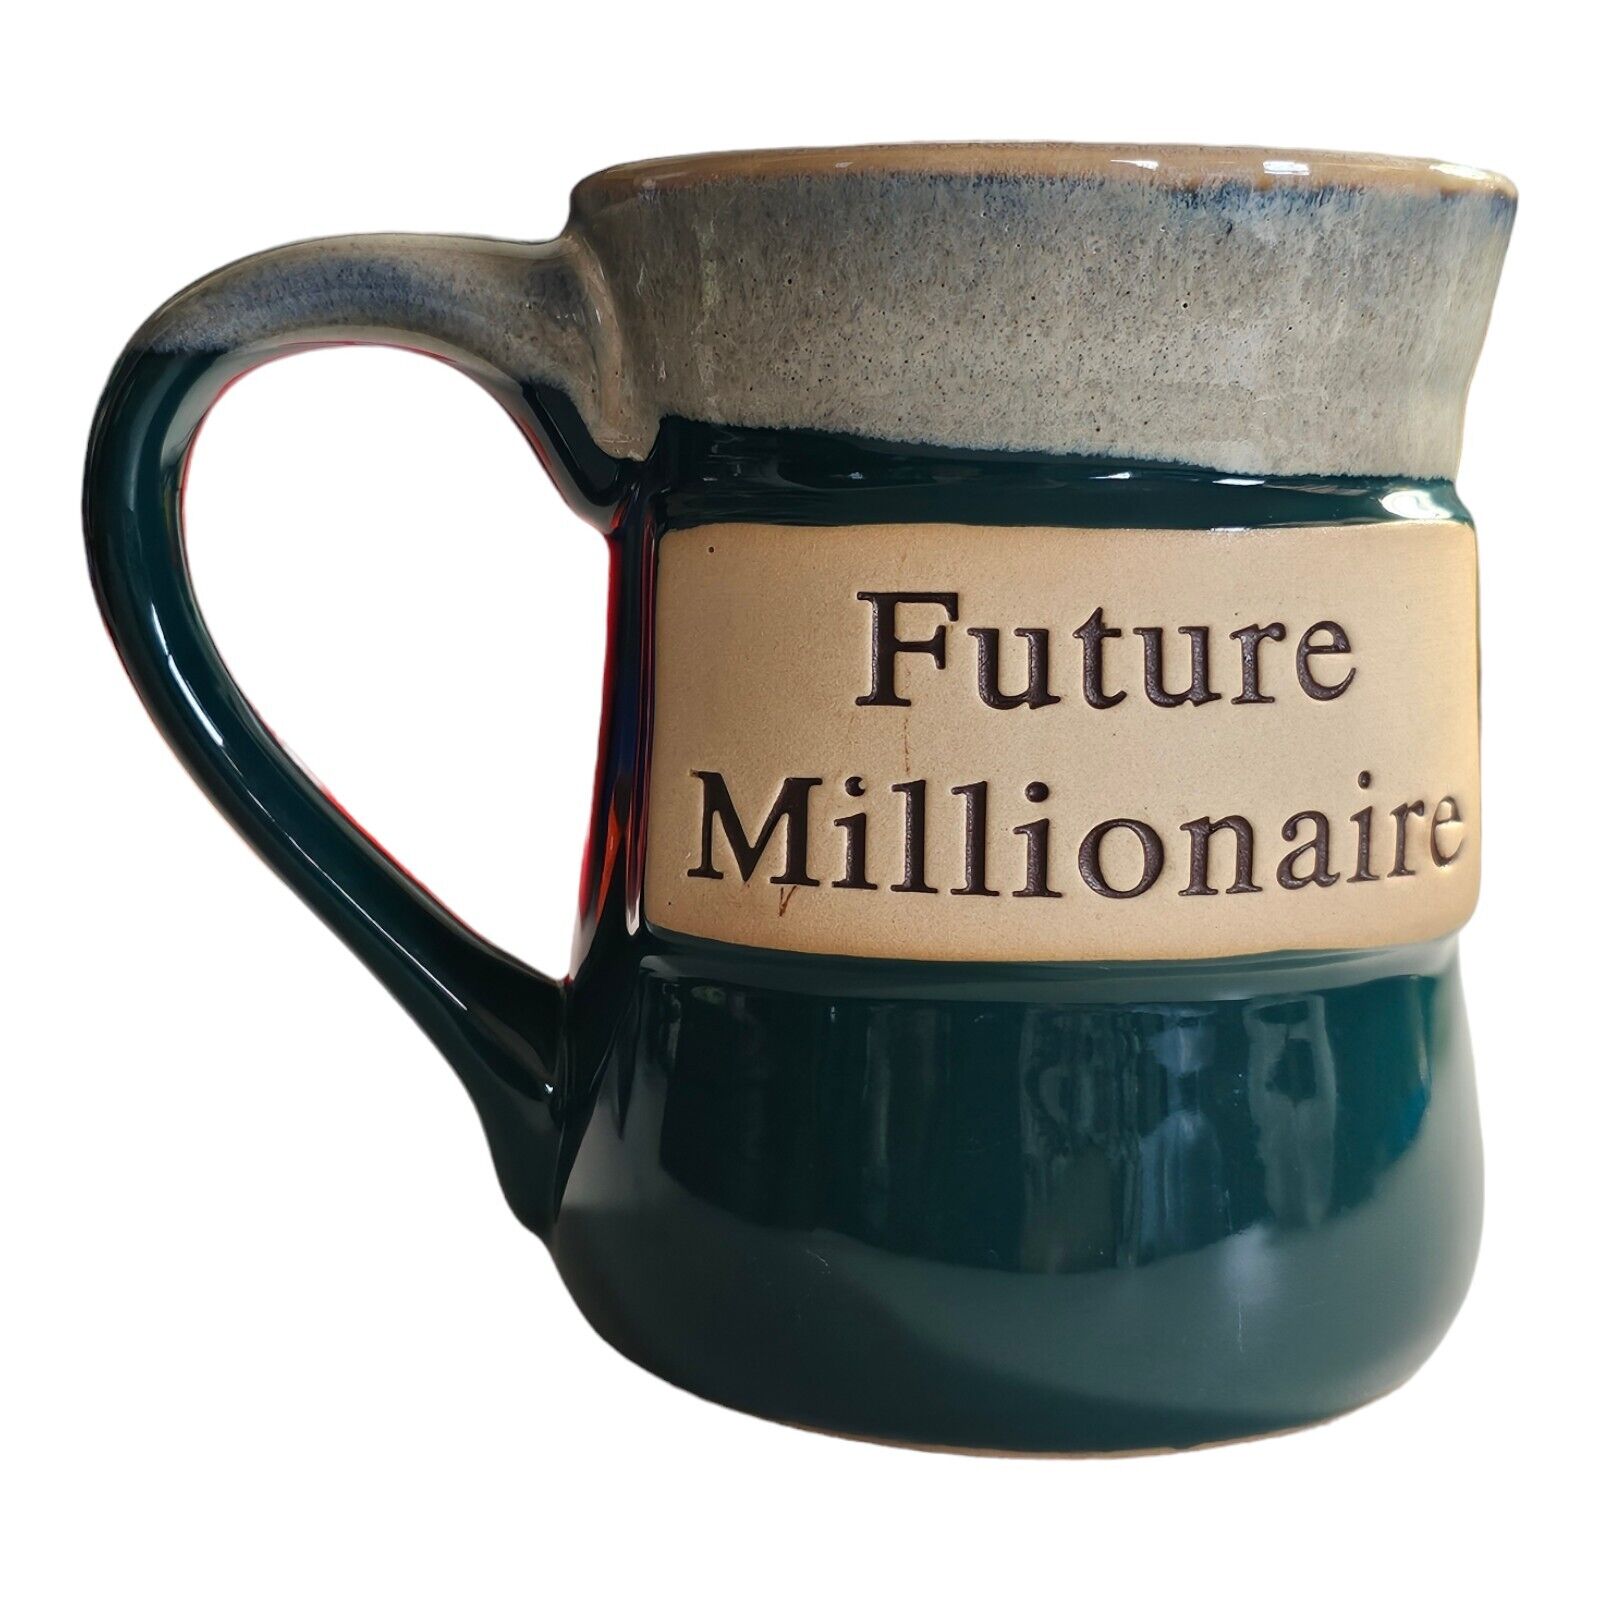 Tumbleweed Pottery Future Millionaire Glazed Green 20 oz. Coffee Mug Cup Clean